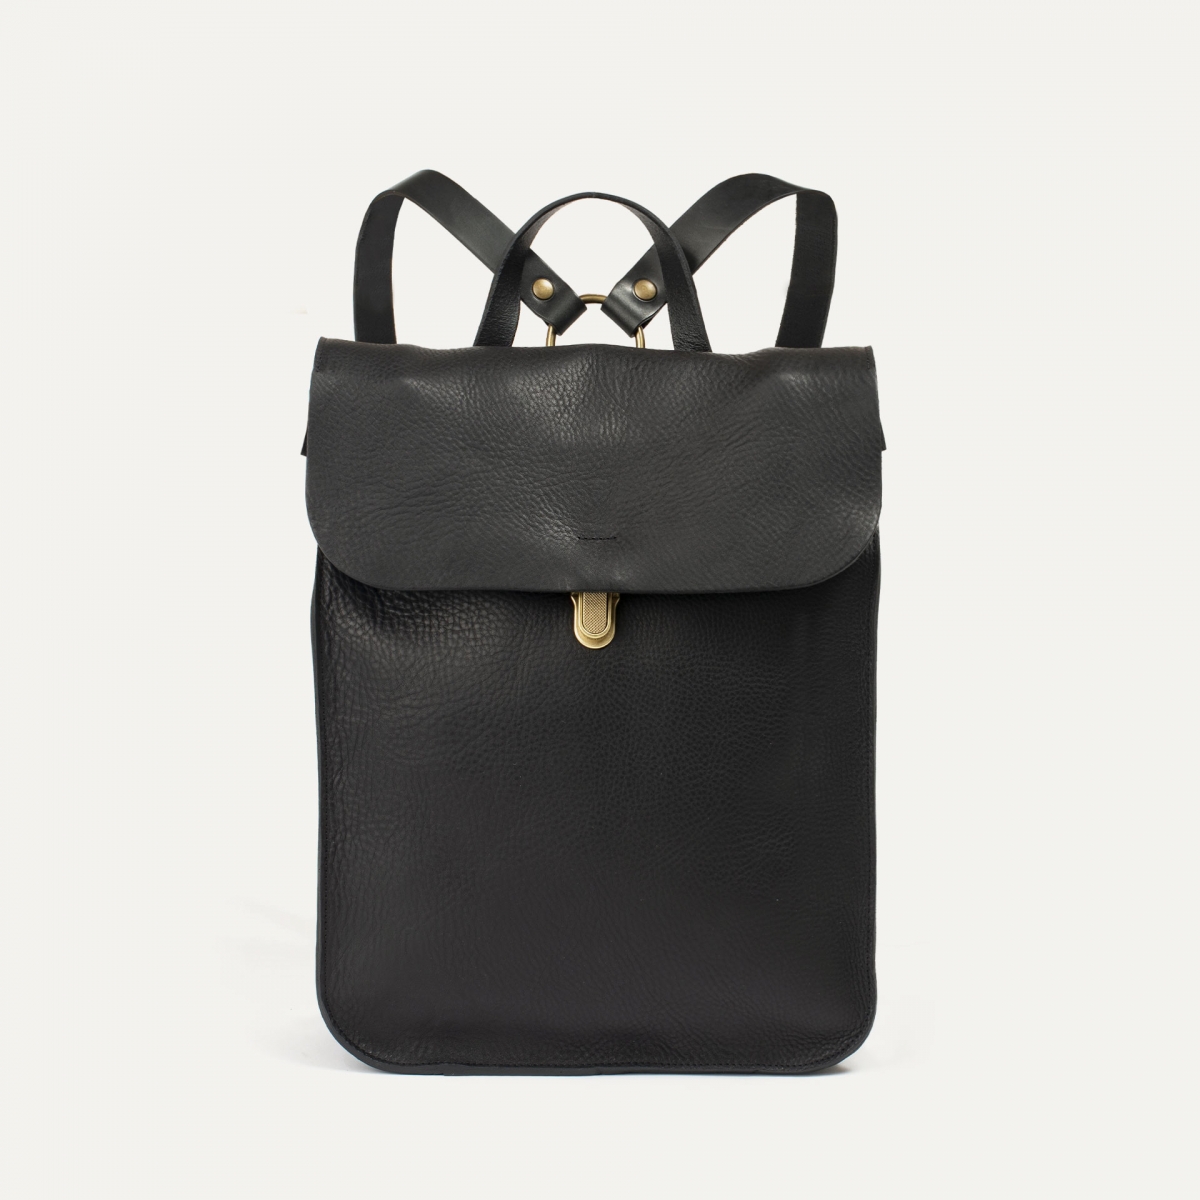 Puncho leather backpack - Black - Puncho leather backpack - Vintage ...